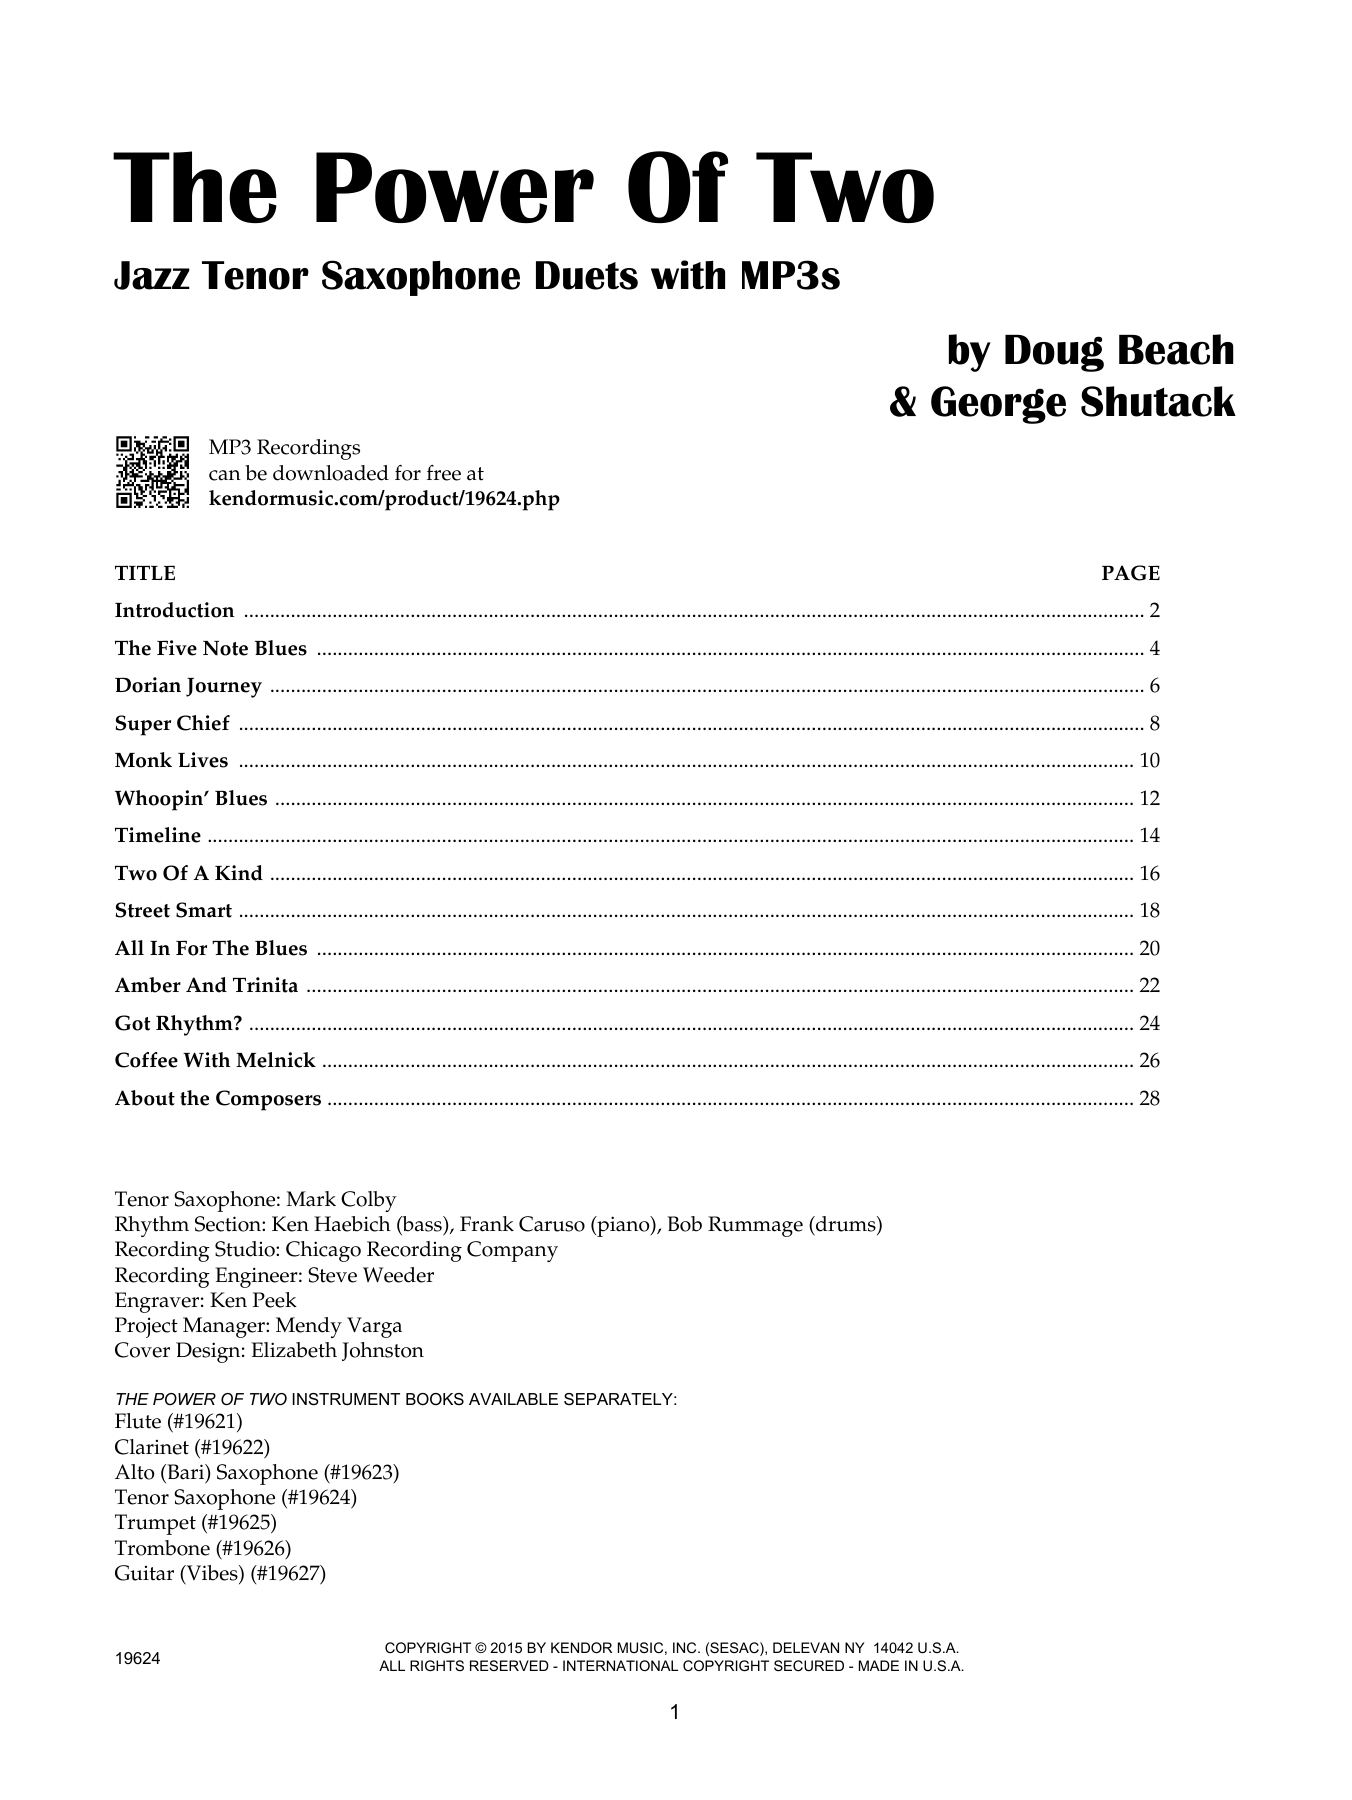 Download Doug Beach The Power Of Two - Tenor Saxophone Sheet Music